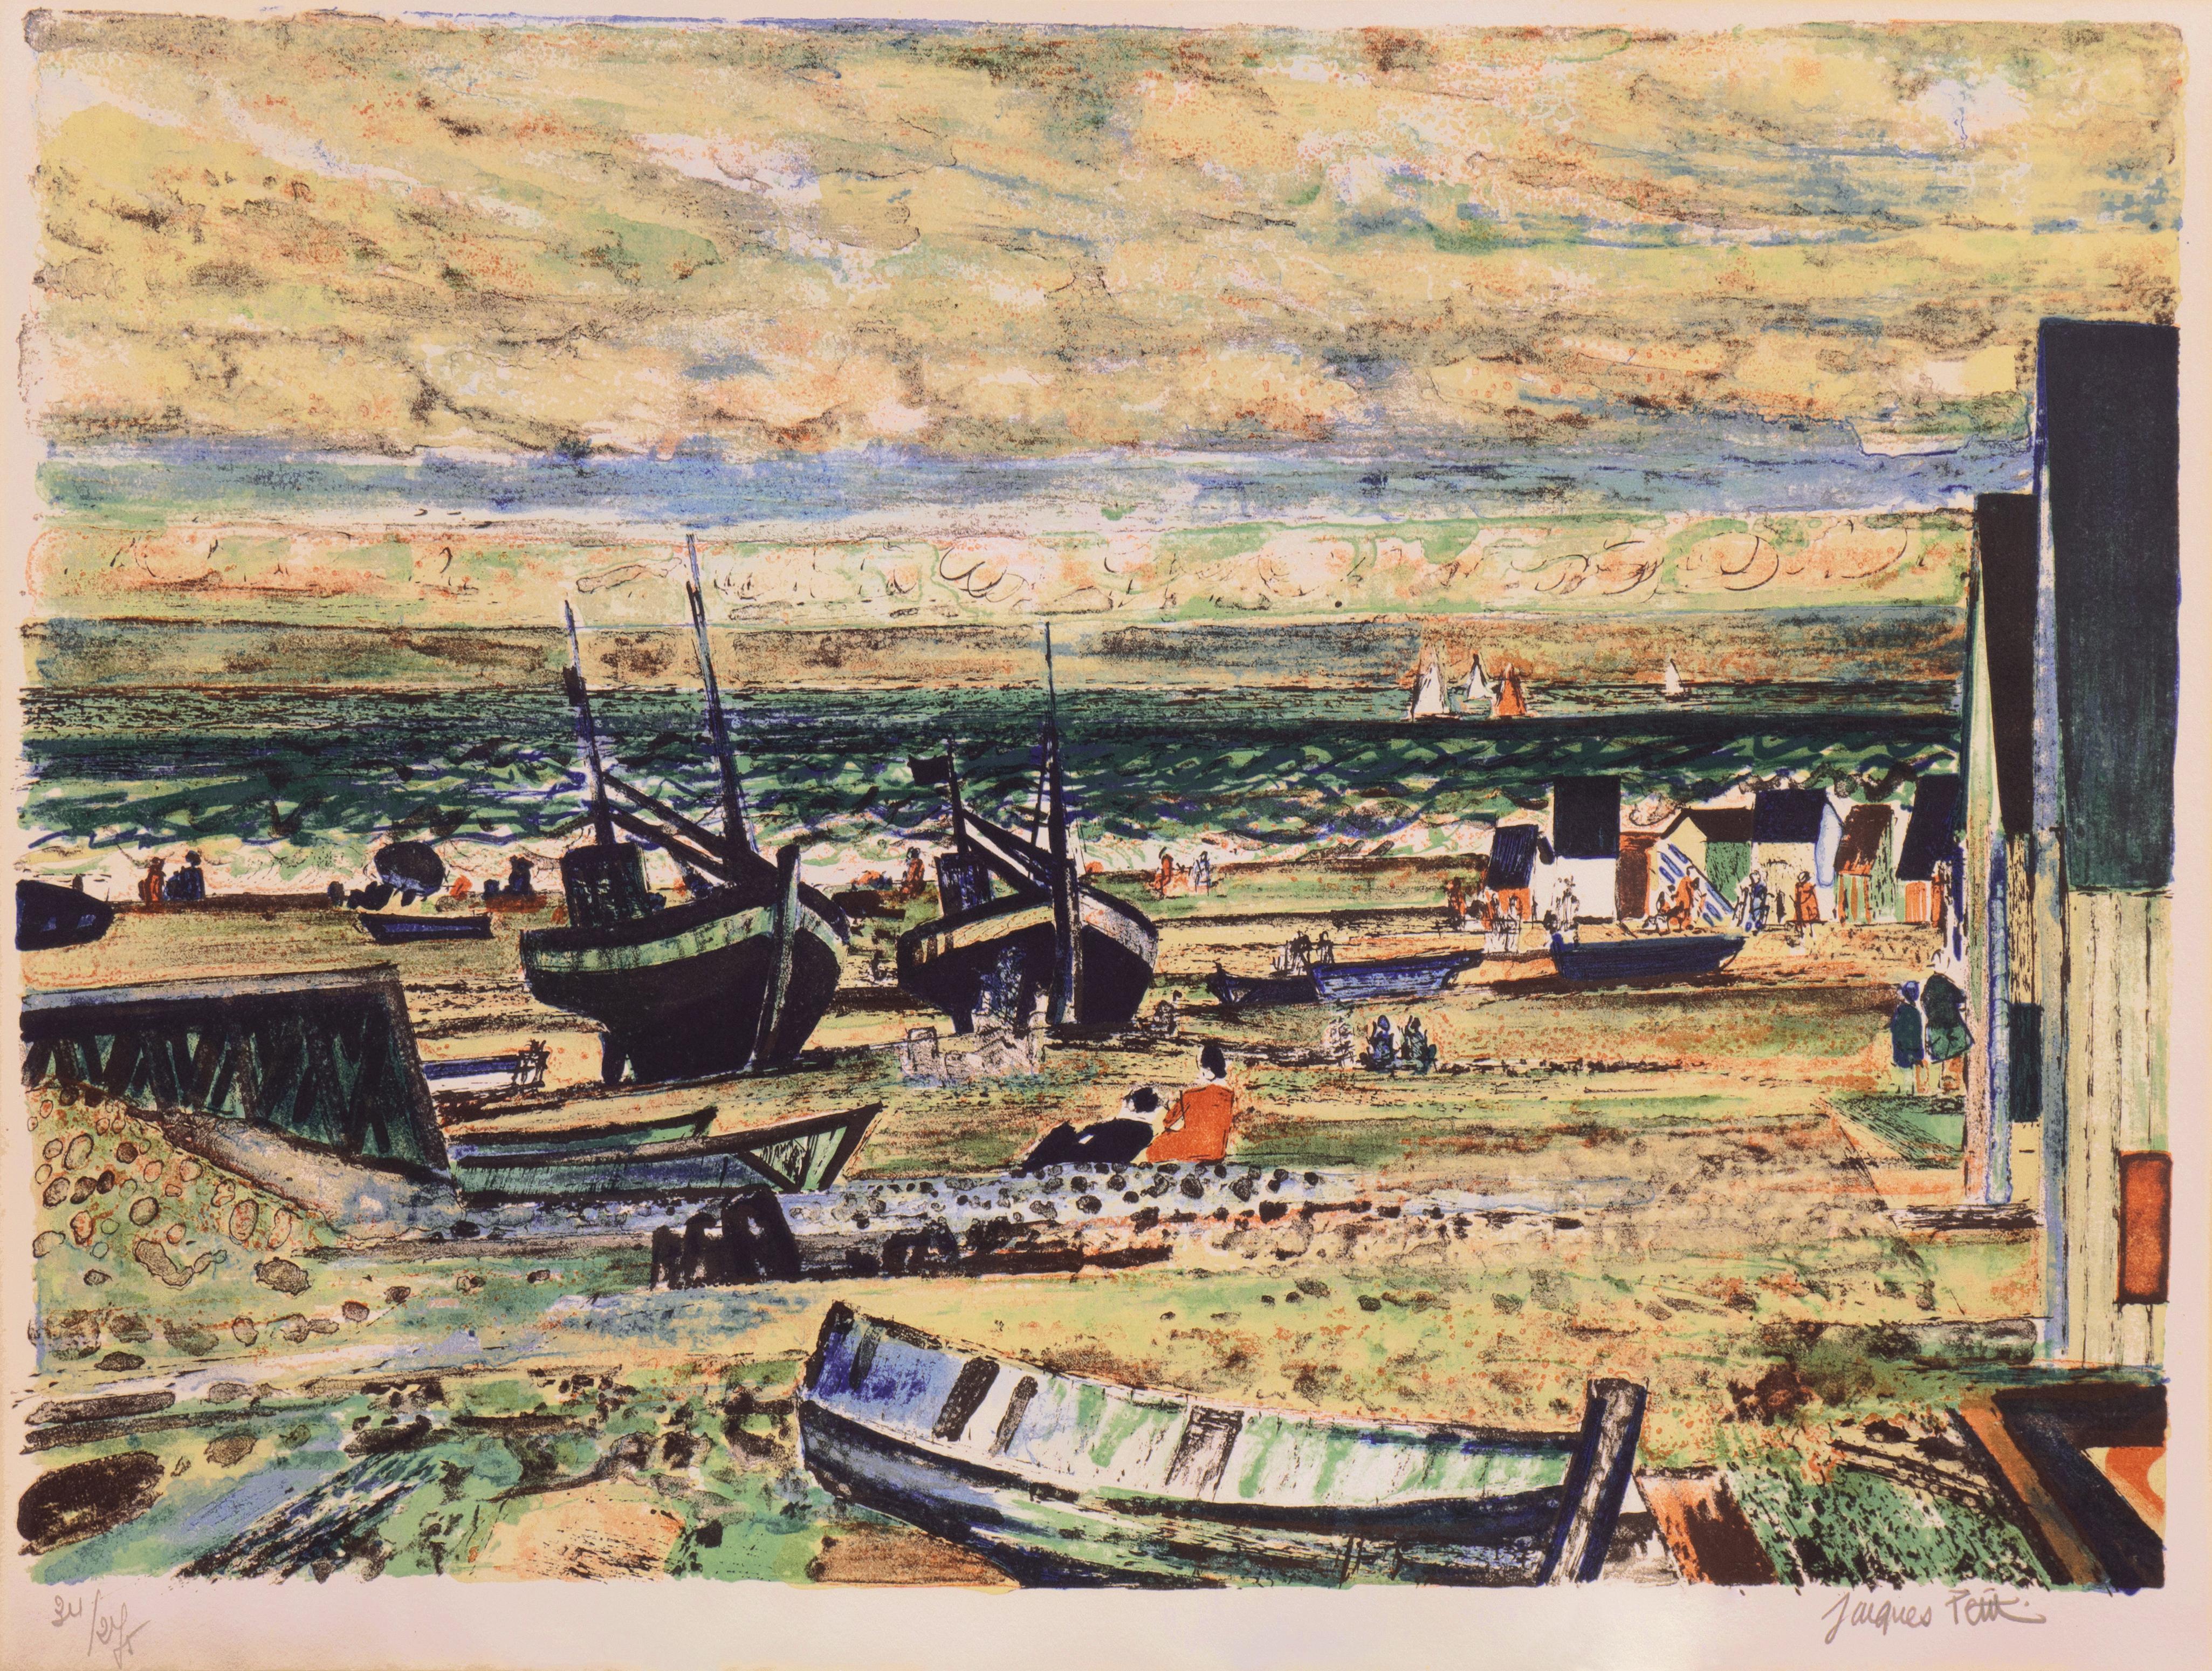 'Fishing Boats on the Atlantic Coast', School of Paris, Post Impressionism - Print by Jacques Petit